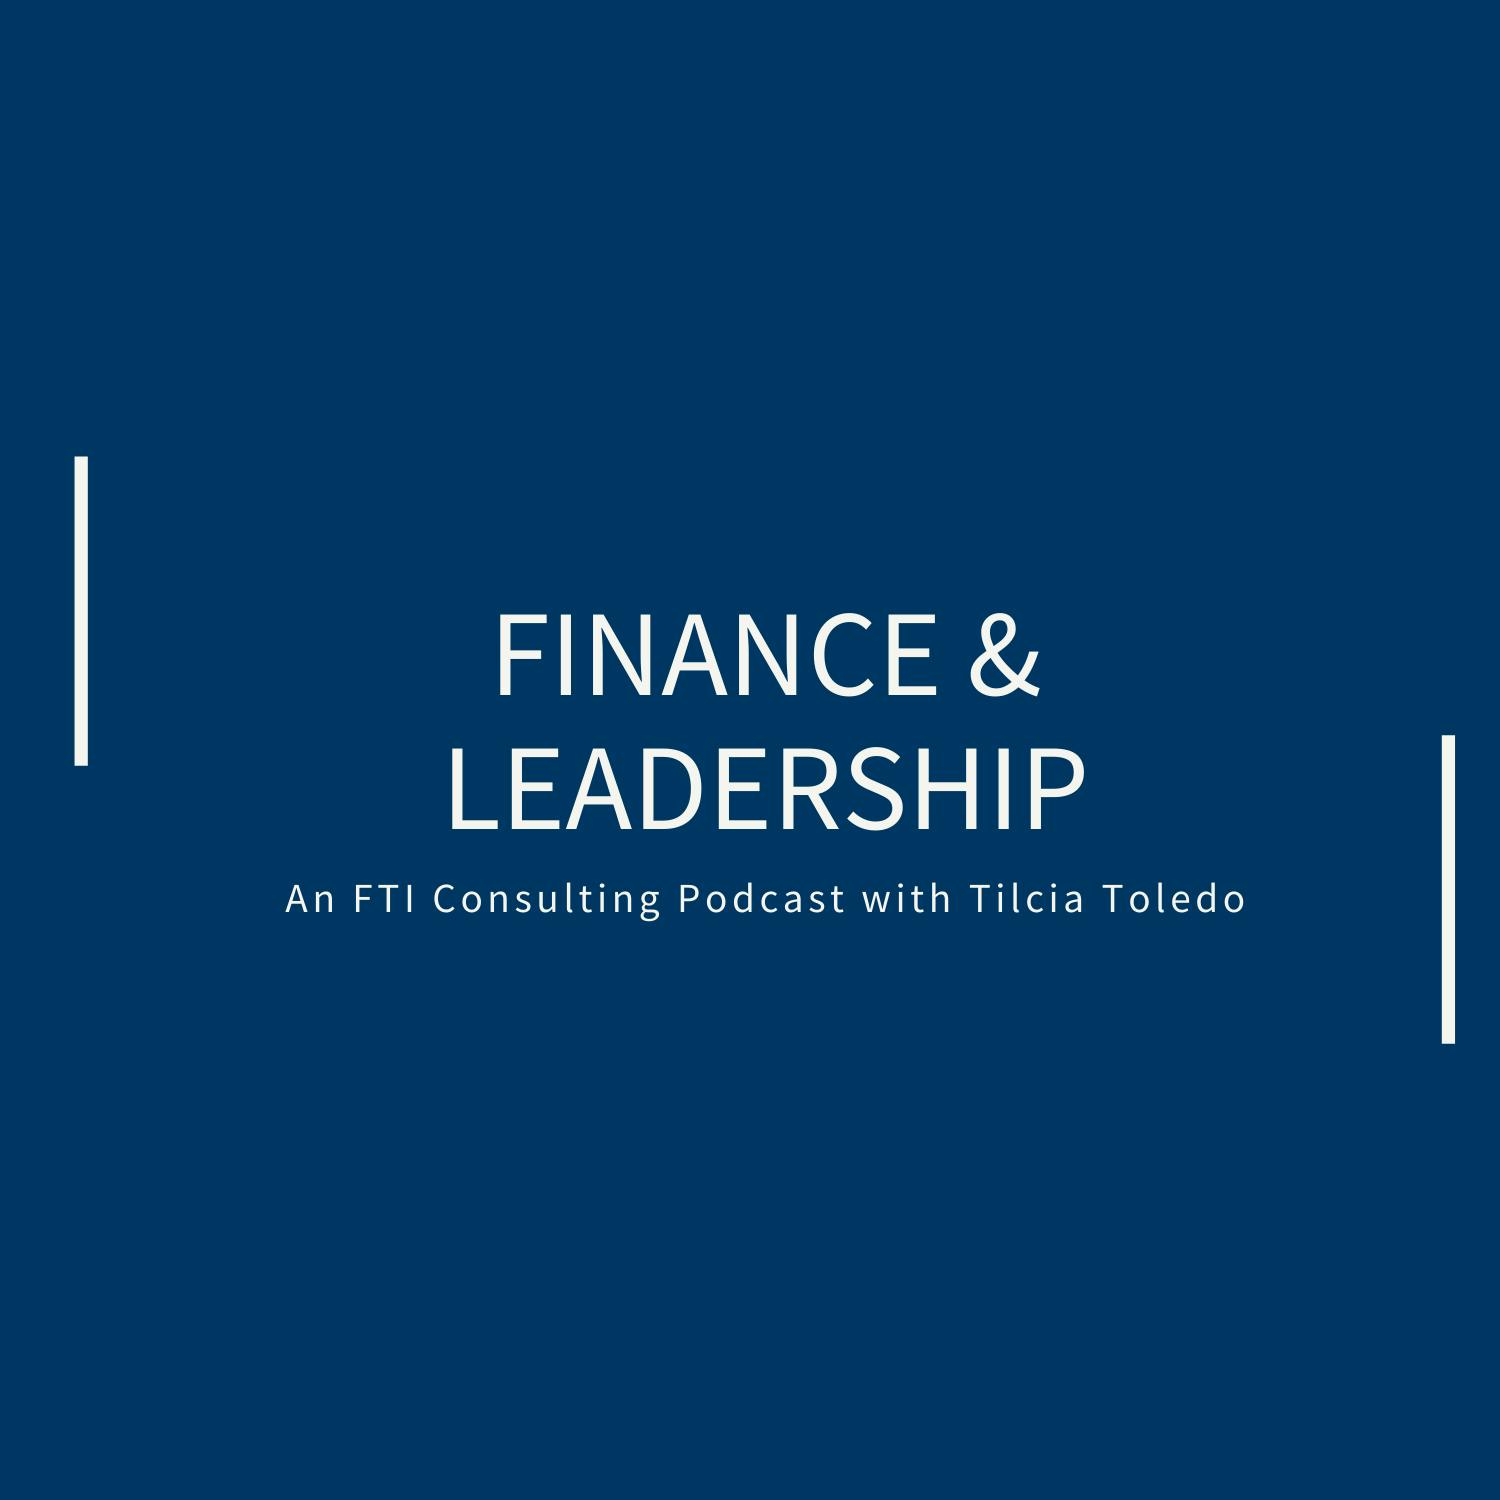 Finance & Leadership podcast show image